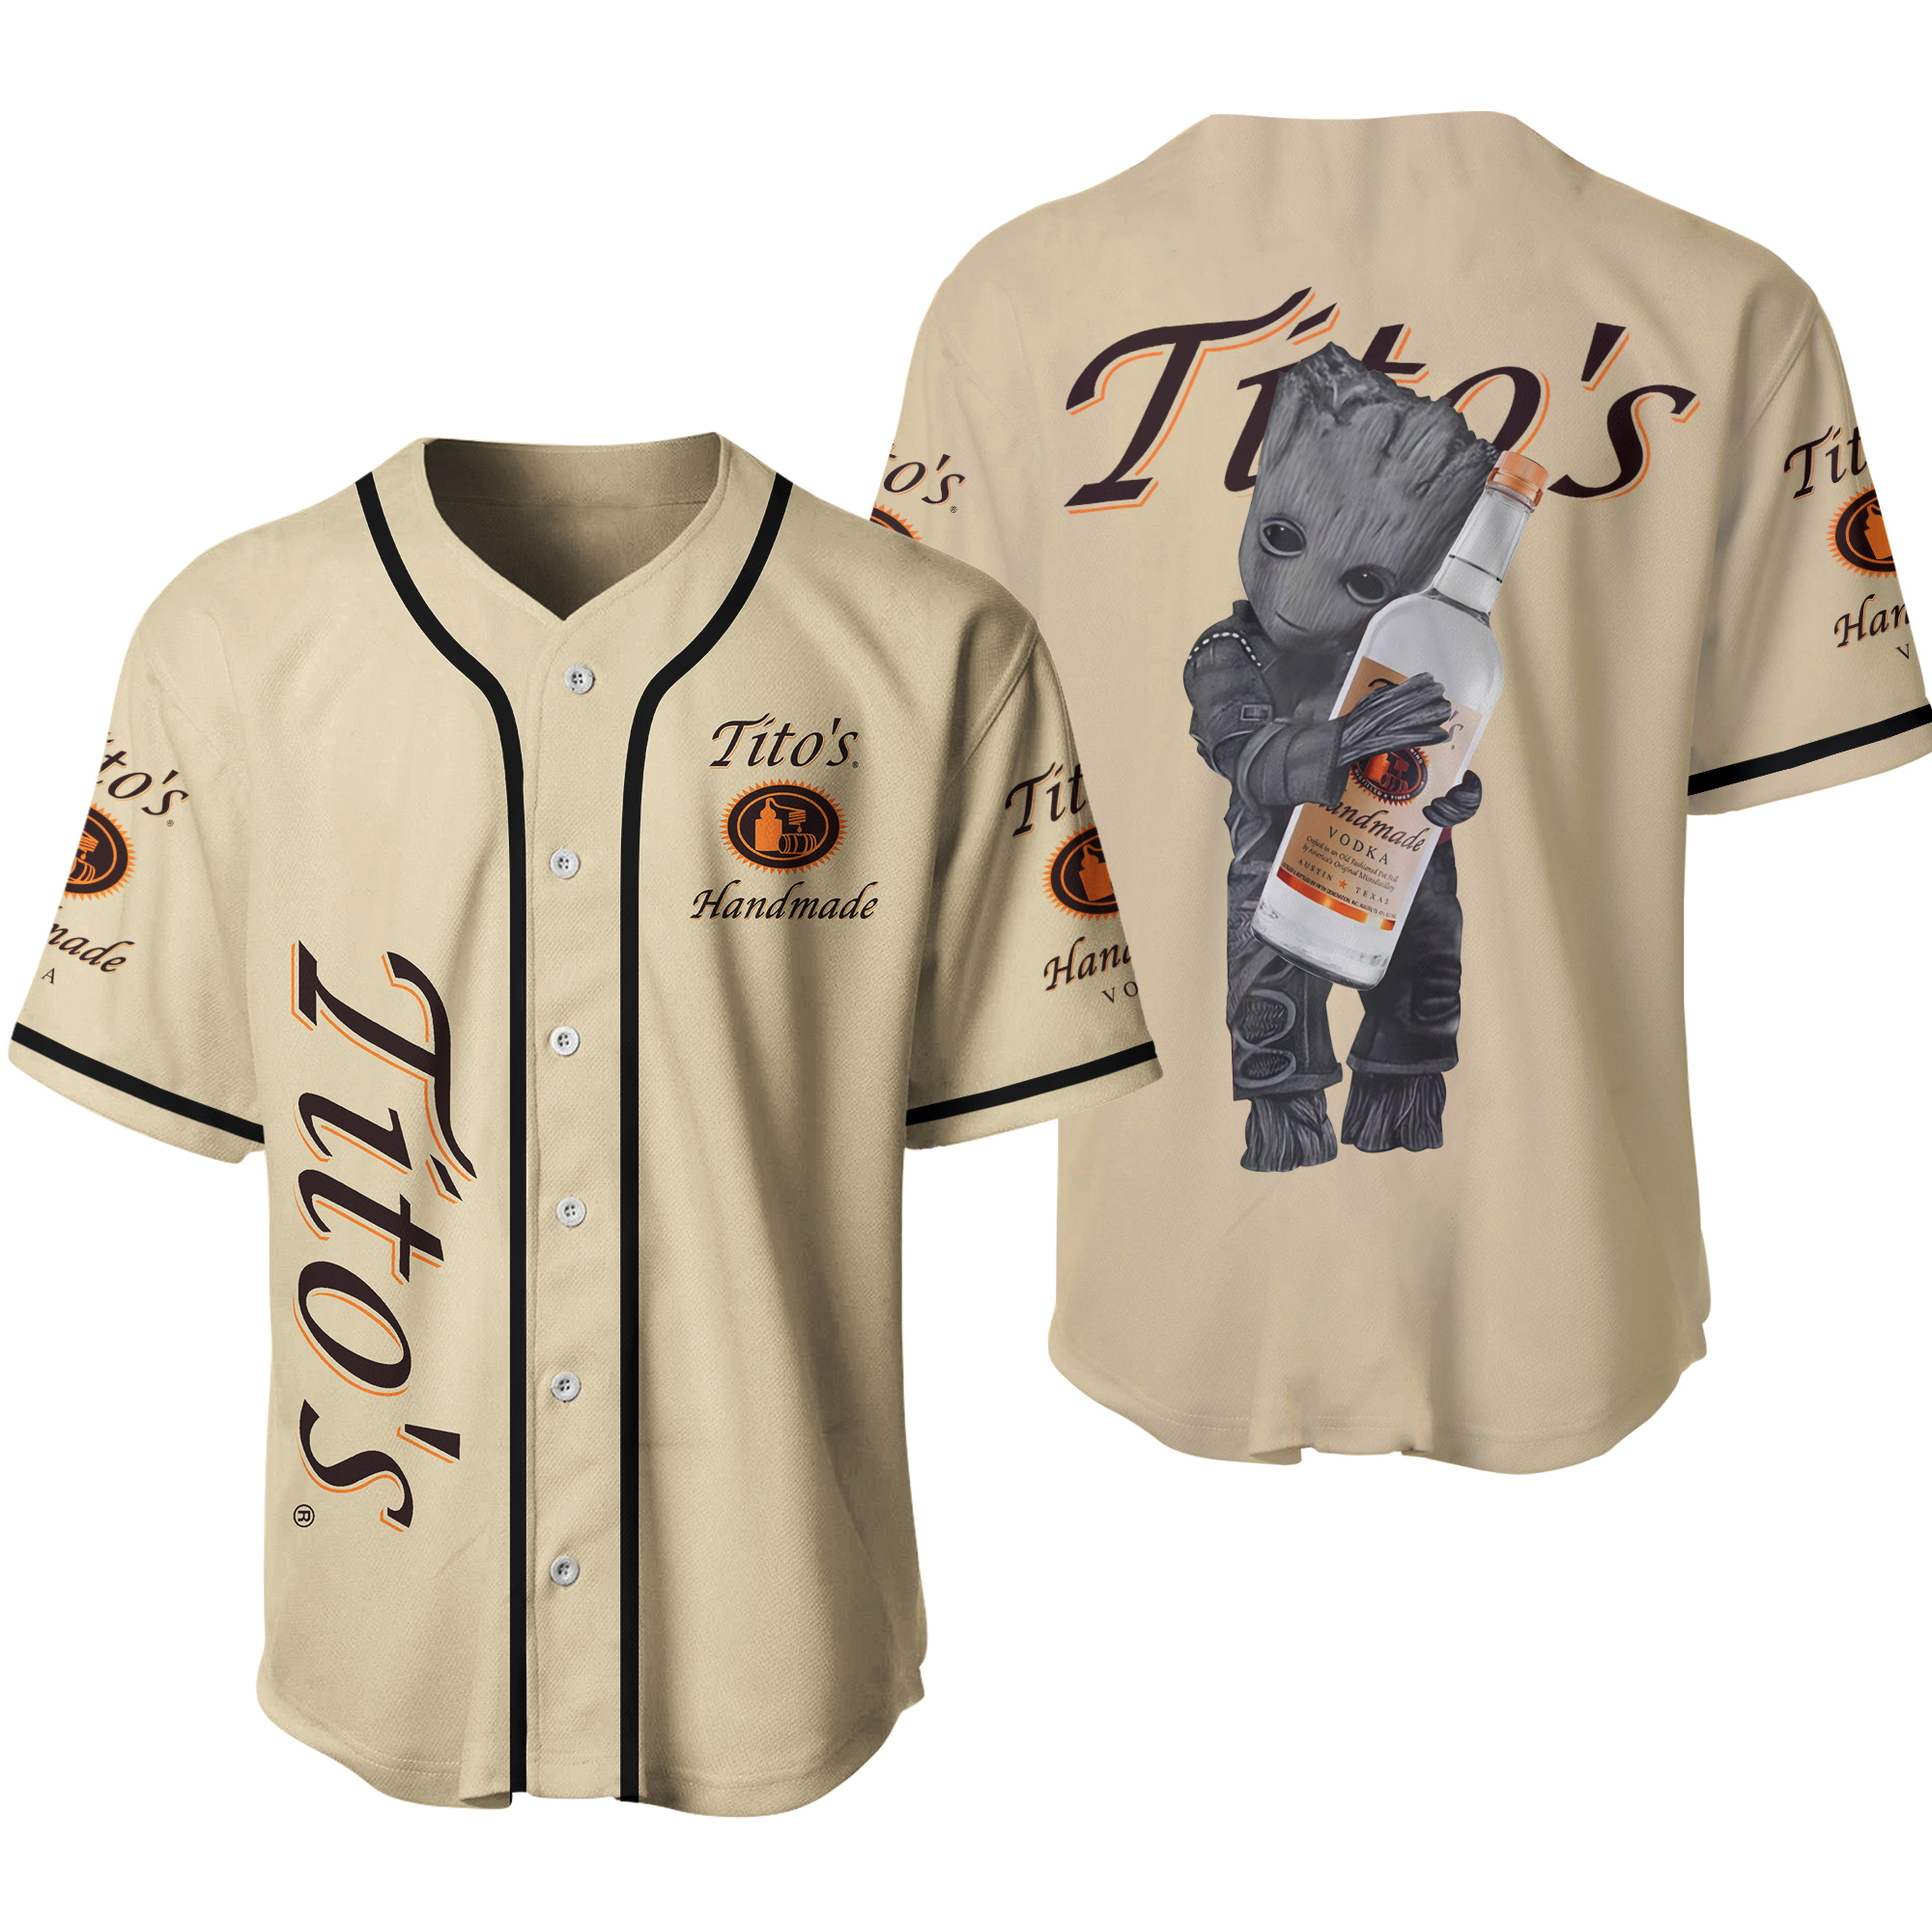  Tito Baseball Jerseys Shirt for Men Women, Tito Summer Shirt,  Gifts for Birthday (S) : Sports & Outdoors